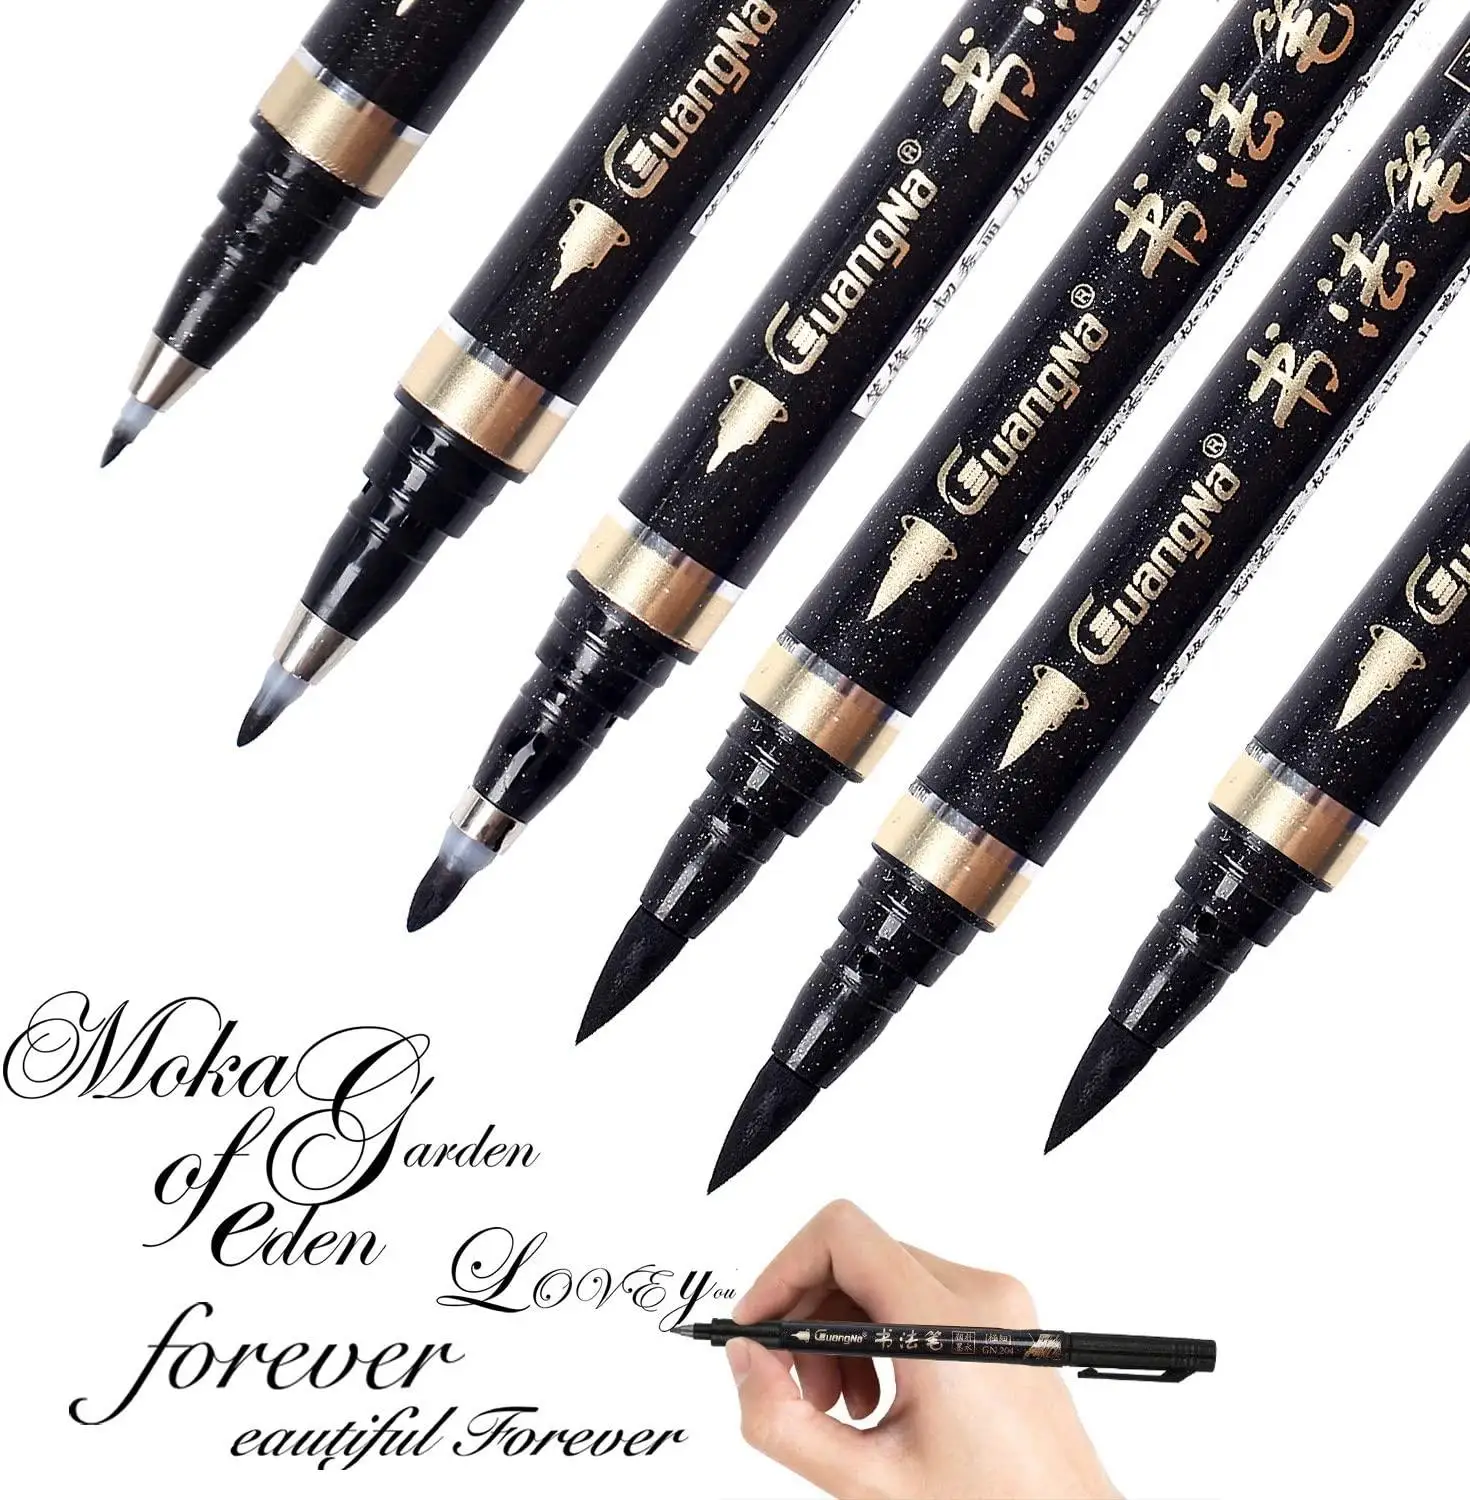 

Calligraphy Pen - Reastar 6 Pcs Black Brush Marker Pen Hand Lettering Pens - for Lettering, Beginners Writing, Signature